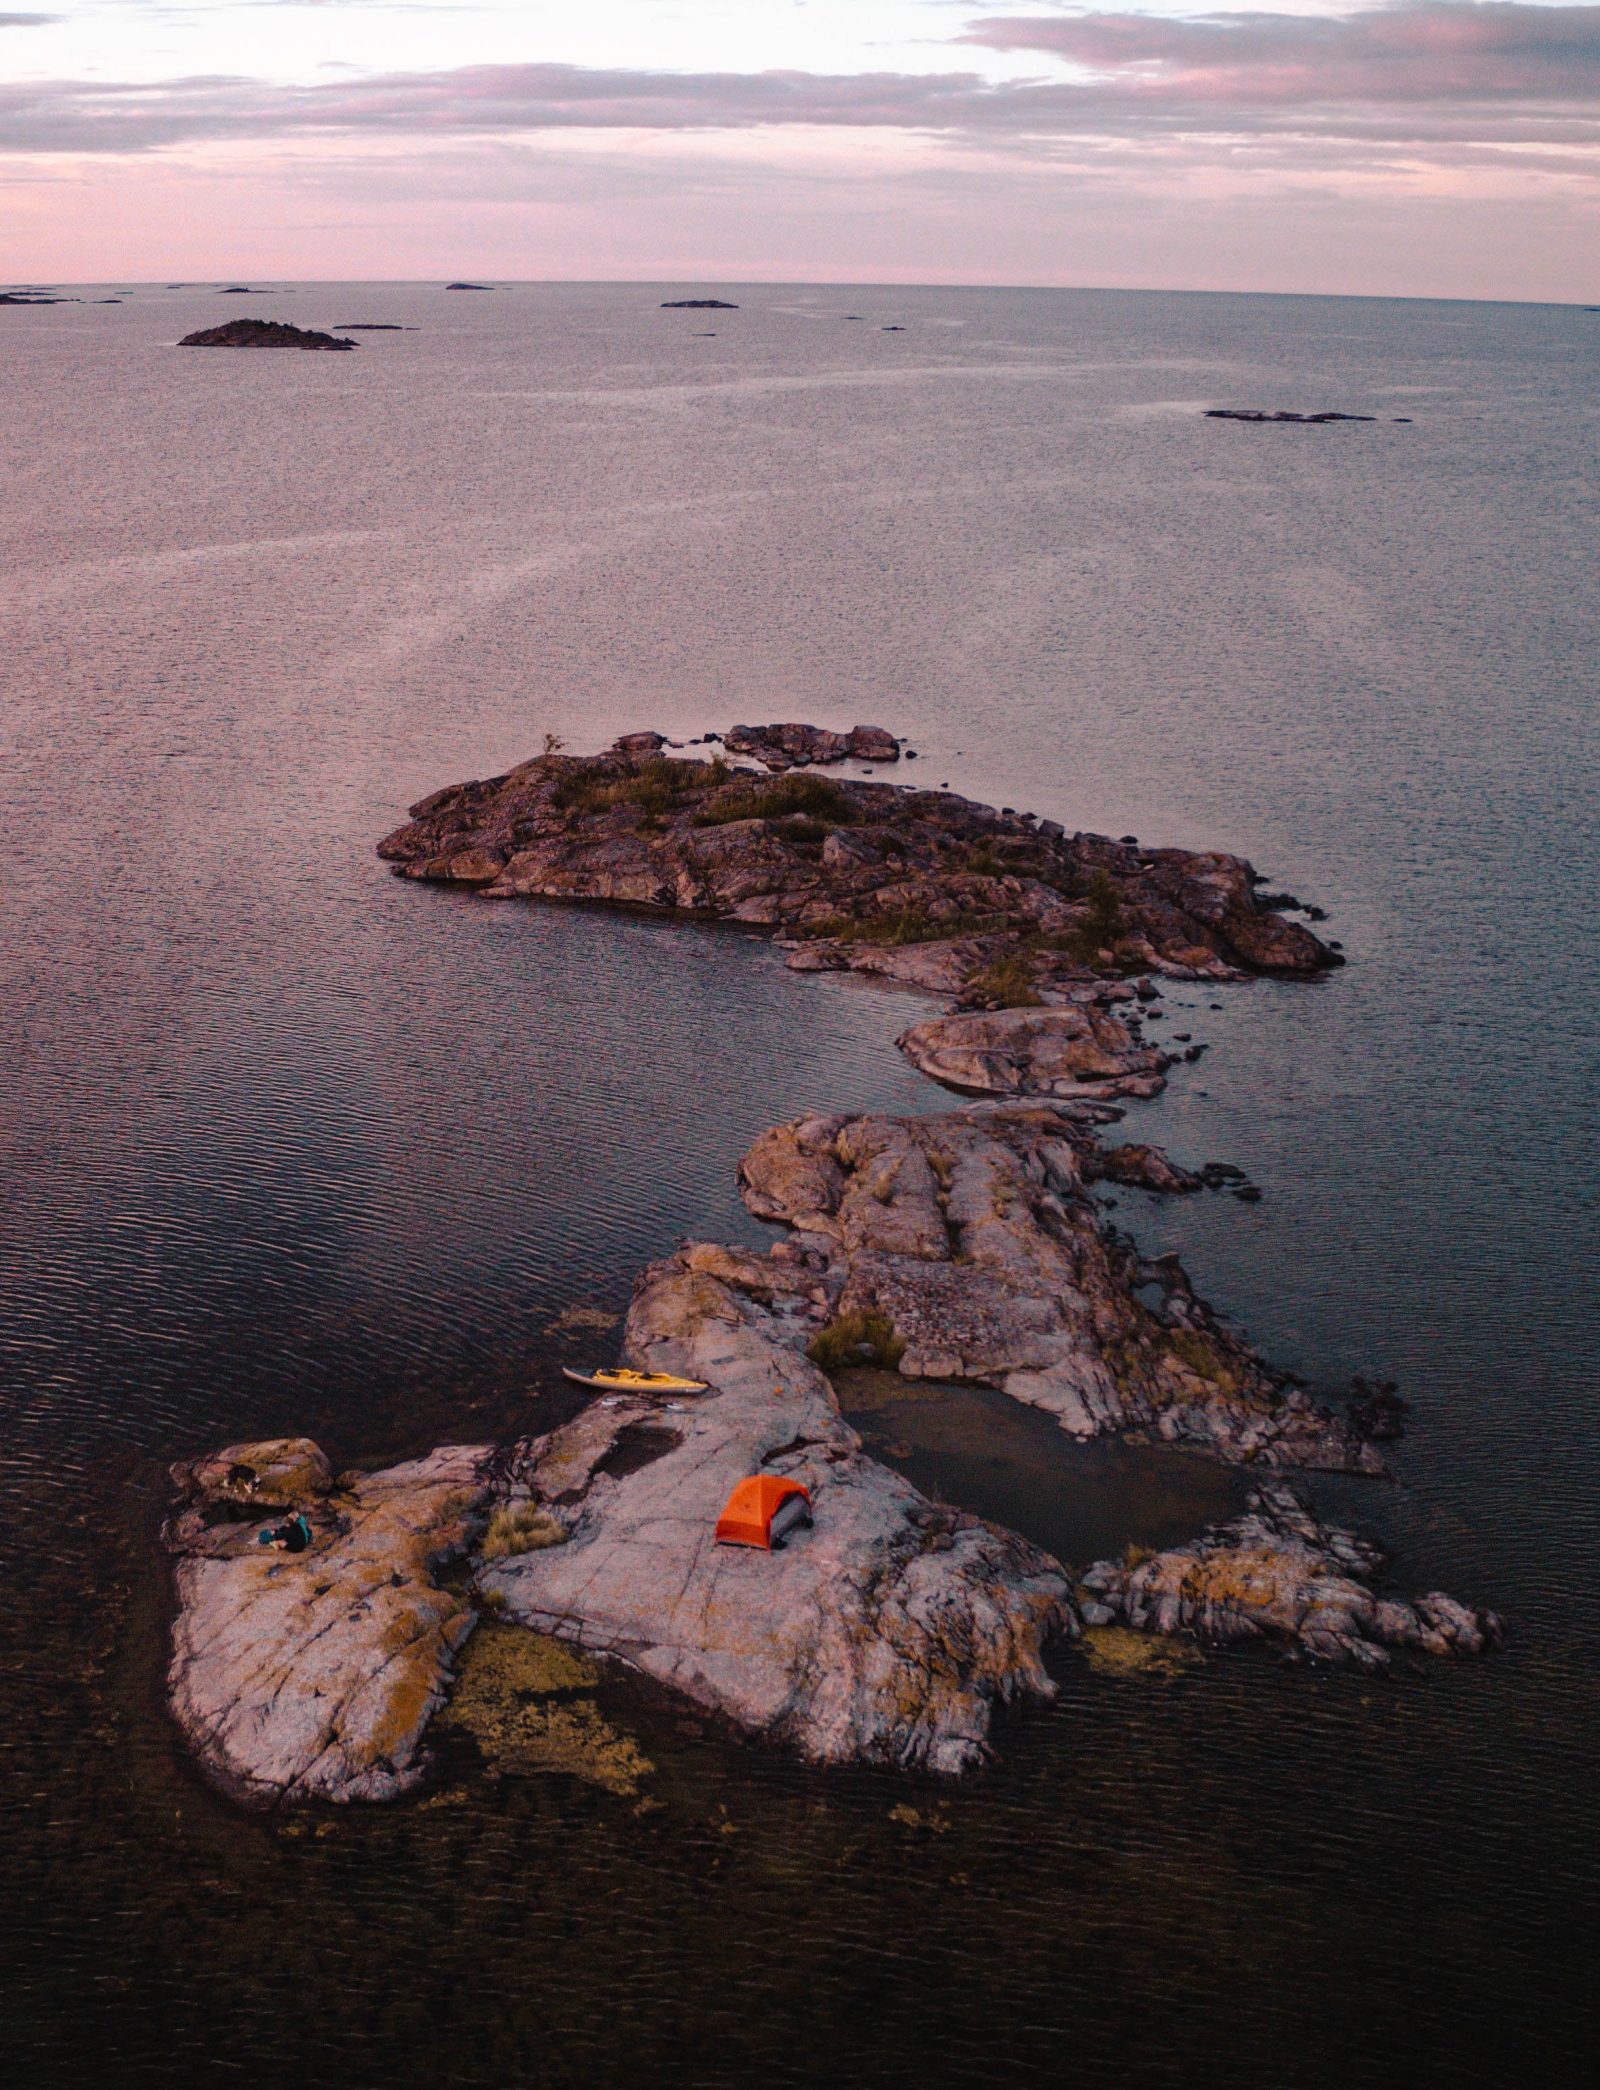 archipelago+island+harstena+sweden+boat+kayak+ocean+tent+camping+drone+dji+sankt+anna+gryt+dog+australian+shepherd